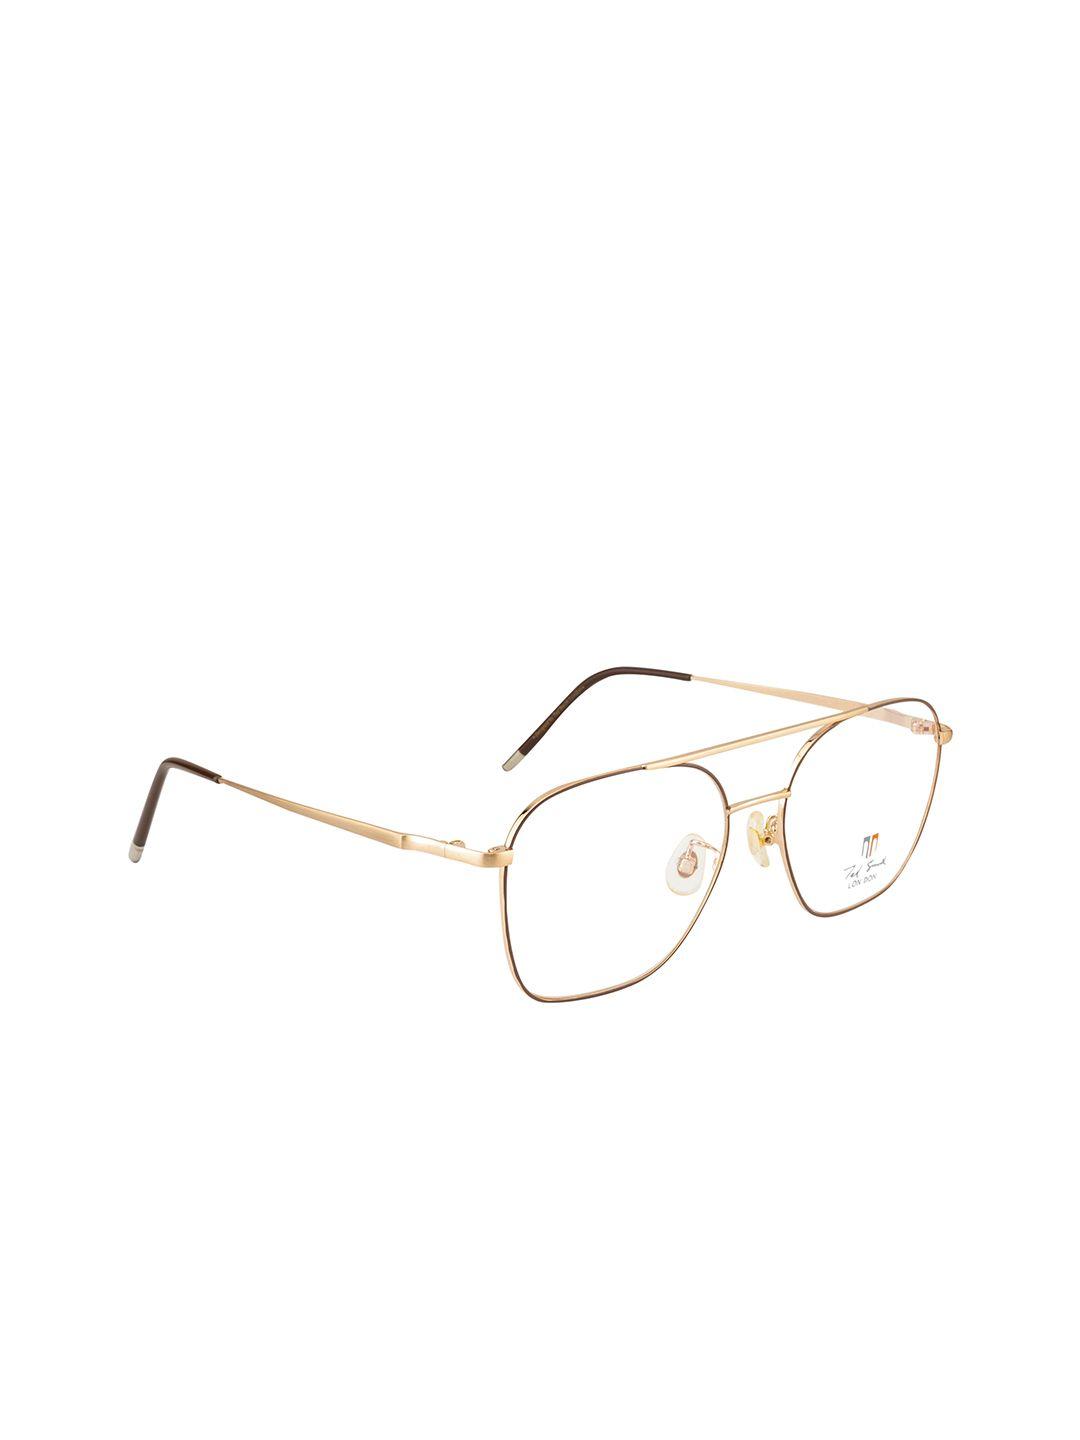 ted smith unisex brown & gold-toned full rim rectangle frames eyeglasses